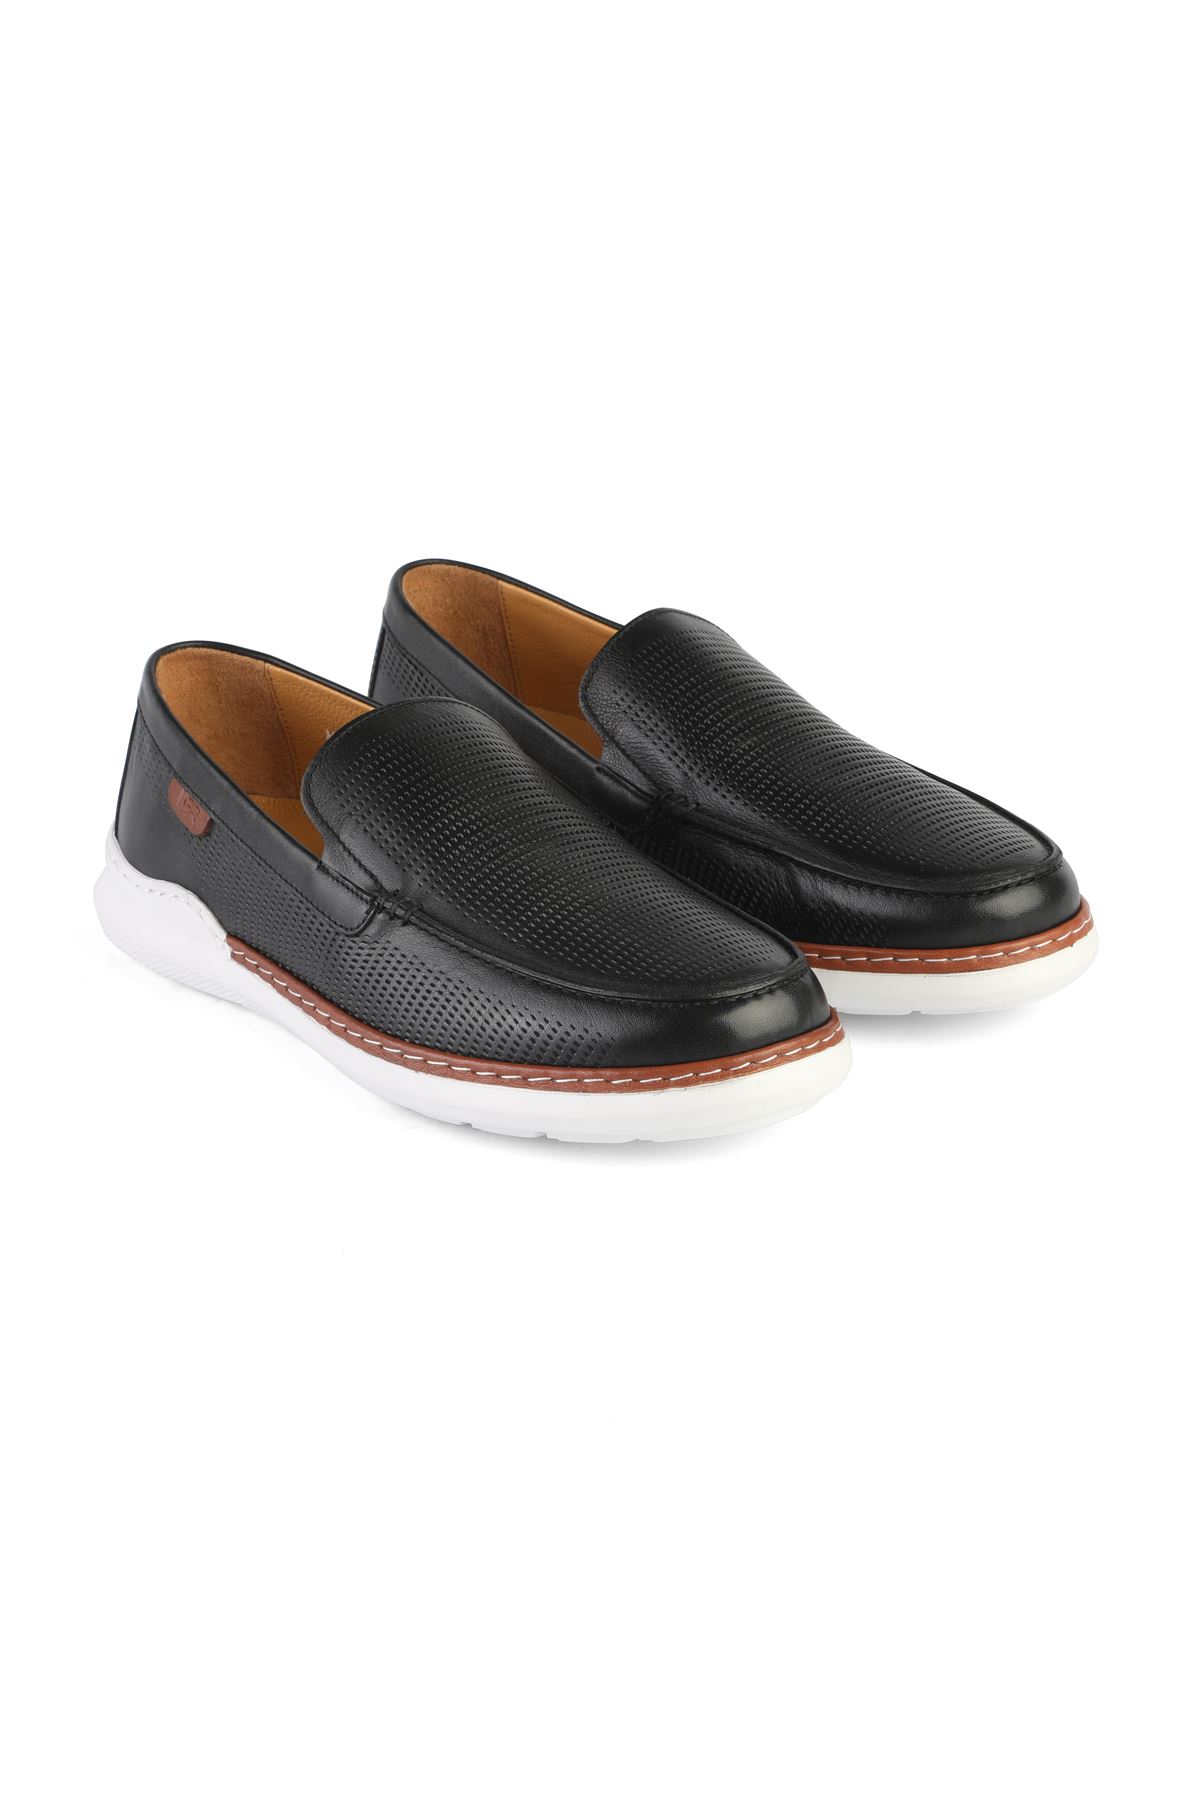 Libero 3332 Black Loafer Shoes